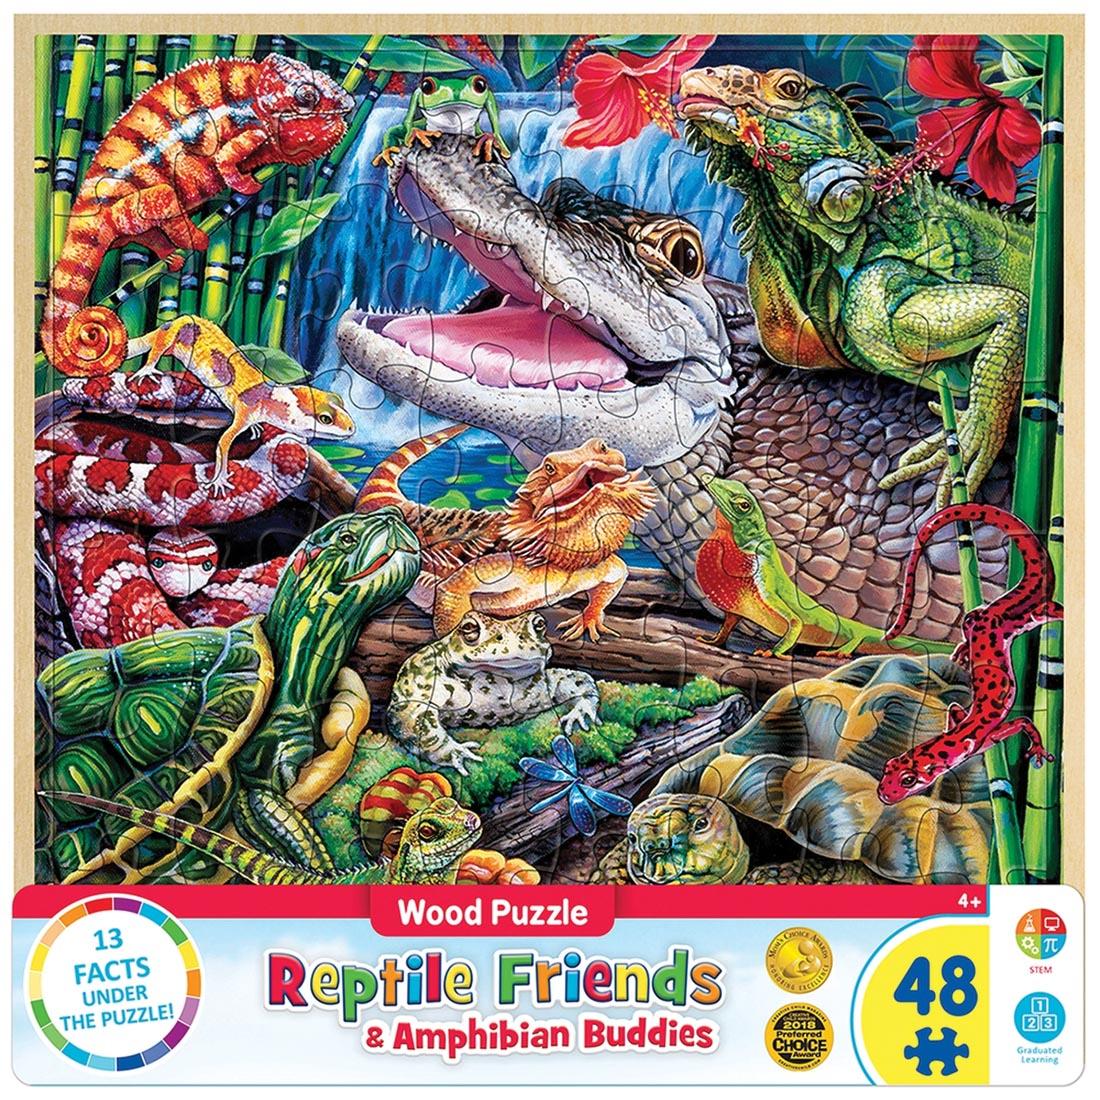 Reptile Friends & Amphibian Buddies 48-Piece Wooden Puzzle By MasterPieces